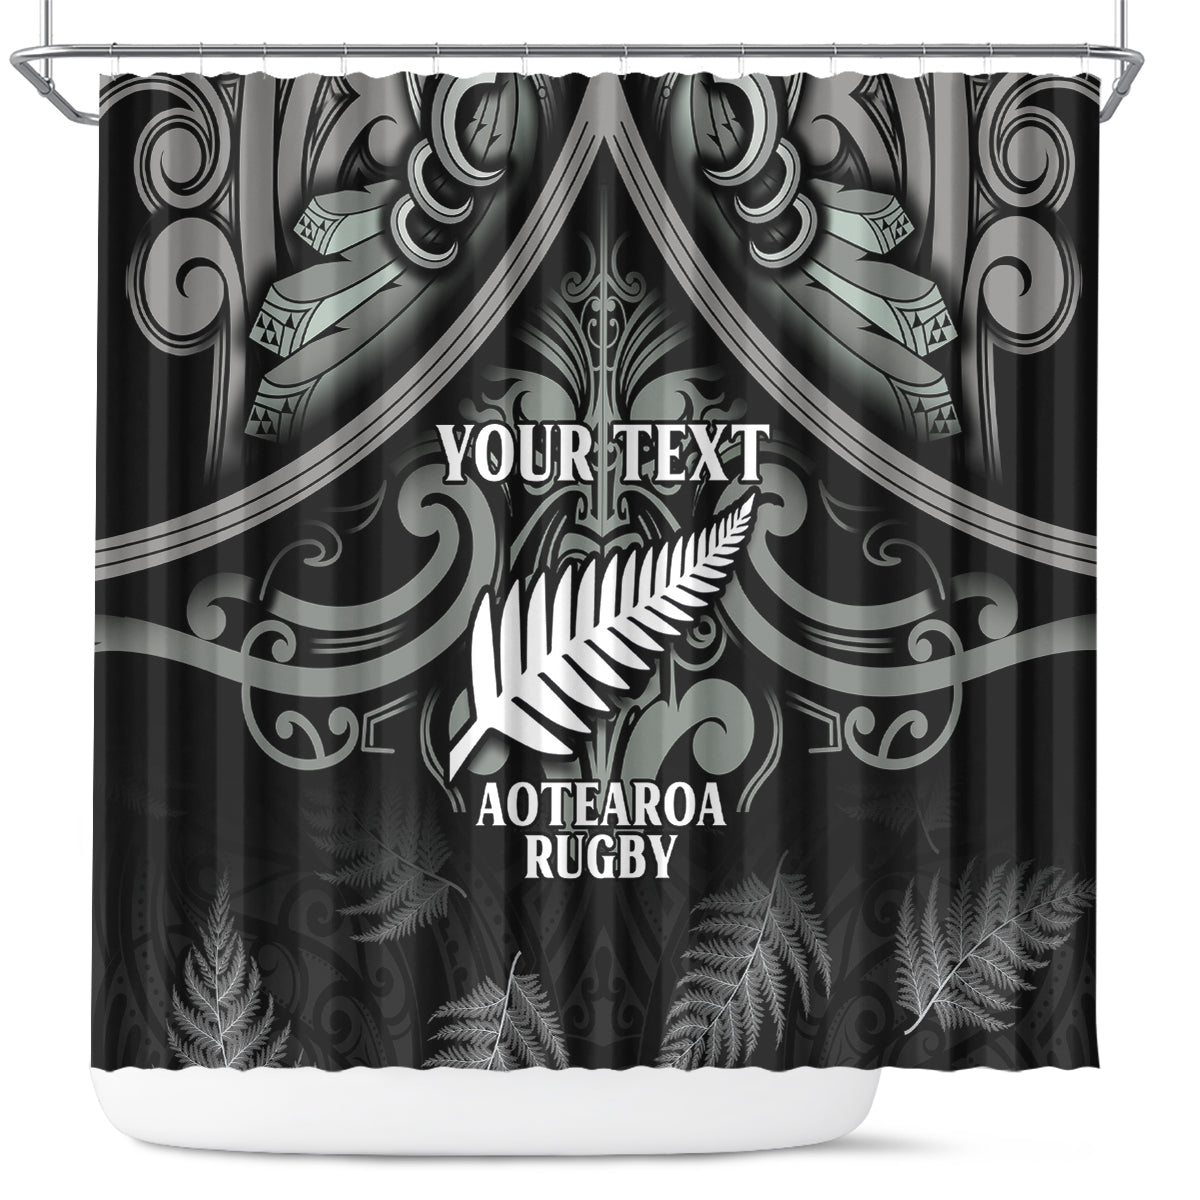 Custom New Zealand Silver Fern Rugby Shower Curtain All Black Since 1892 Aotearoa Moko Maori